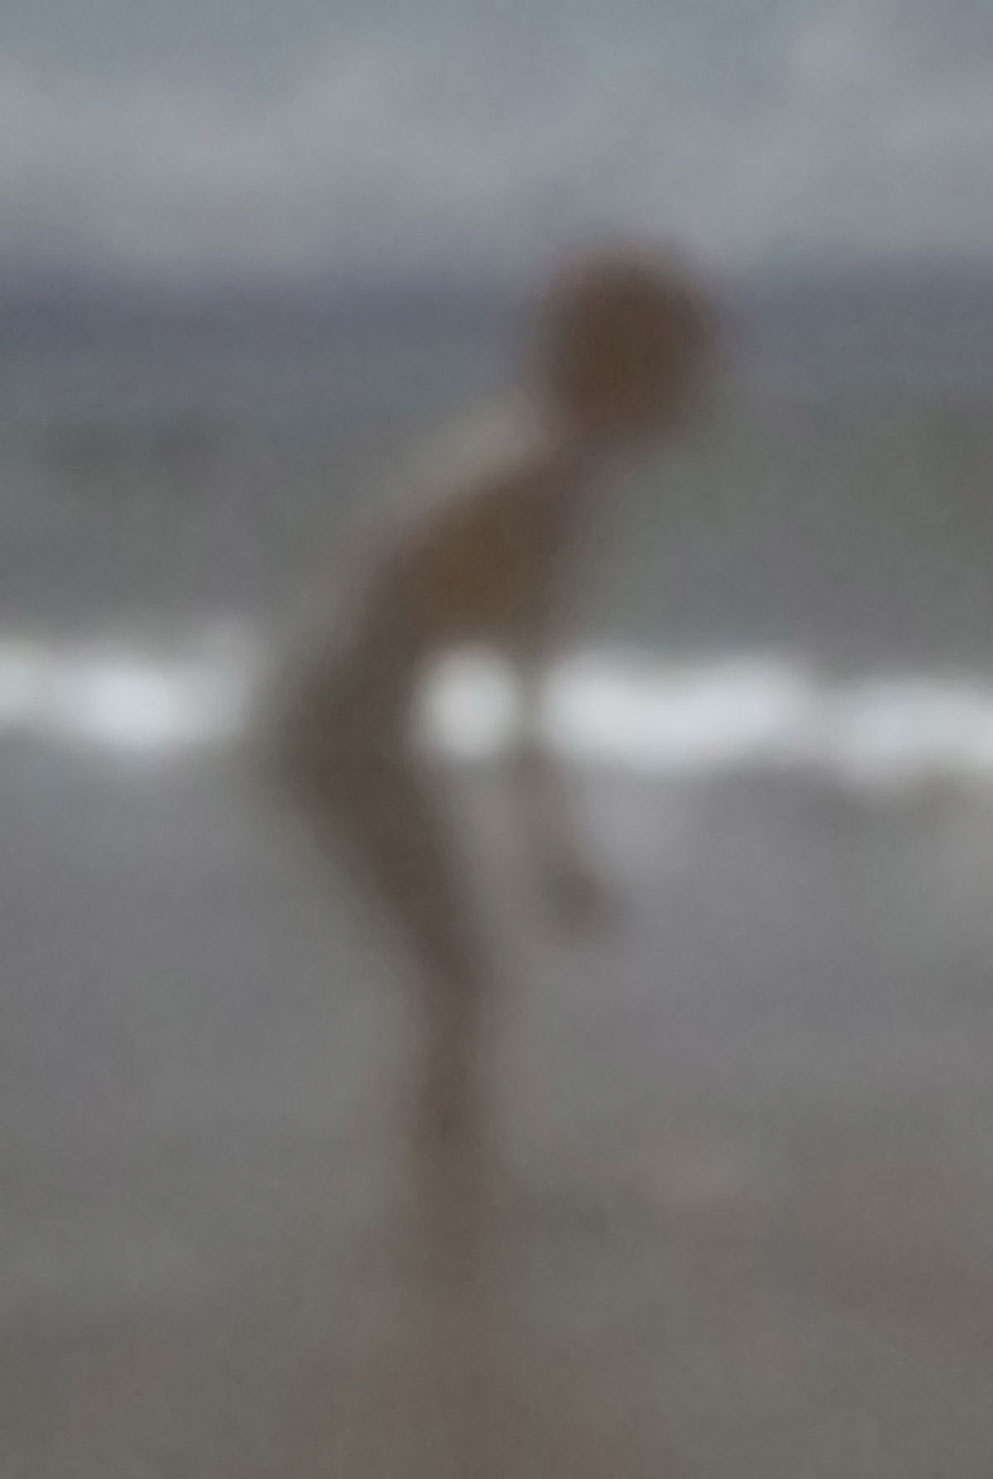 14 „Junge am Strand“, 2020, Auckland NZ, Camera Obscura, Pigmentdruck auf Alu-Dibond